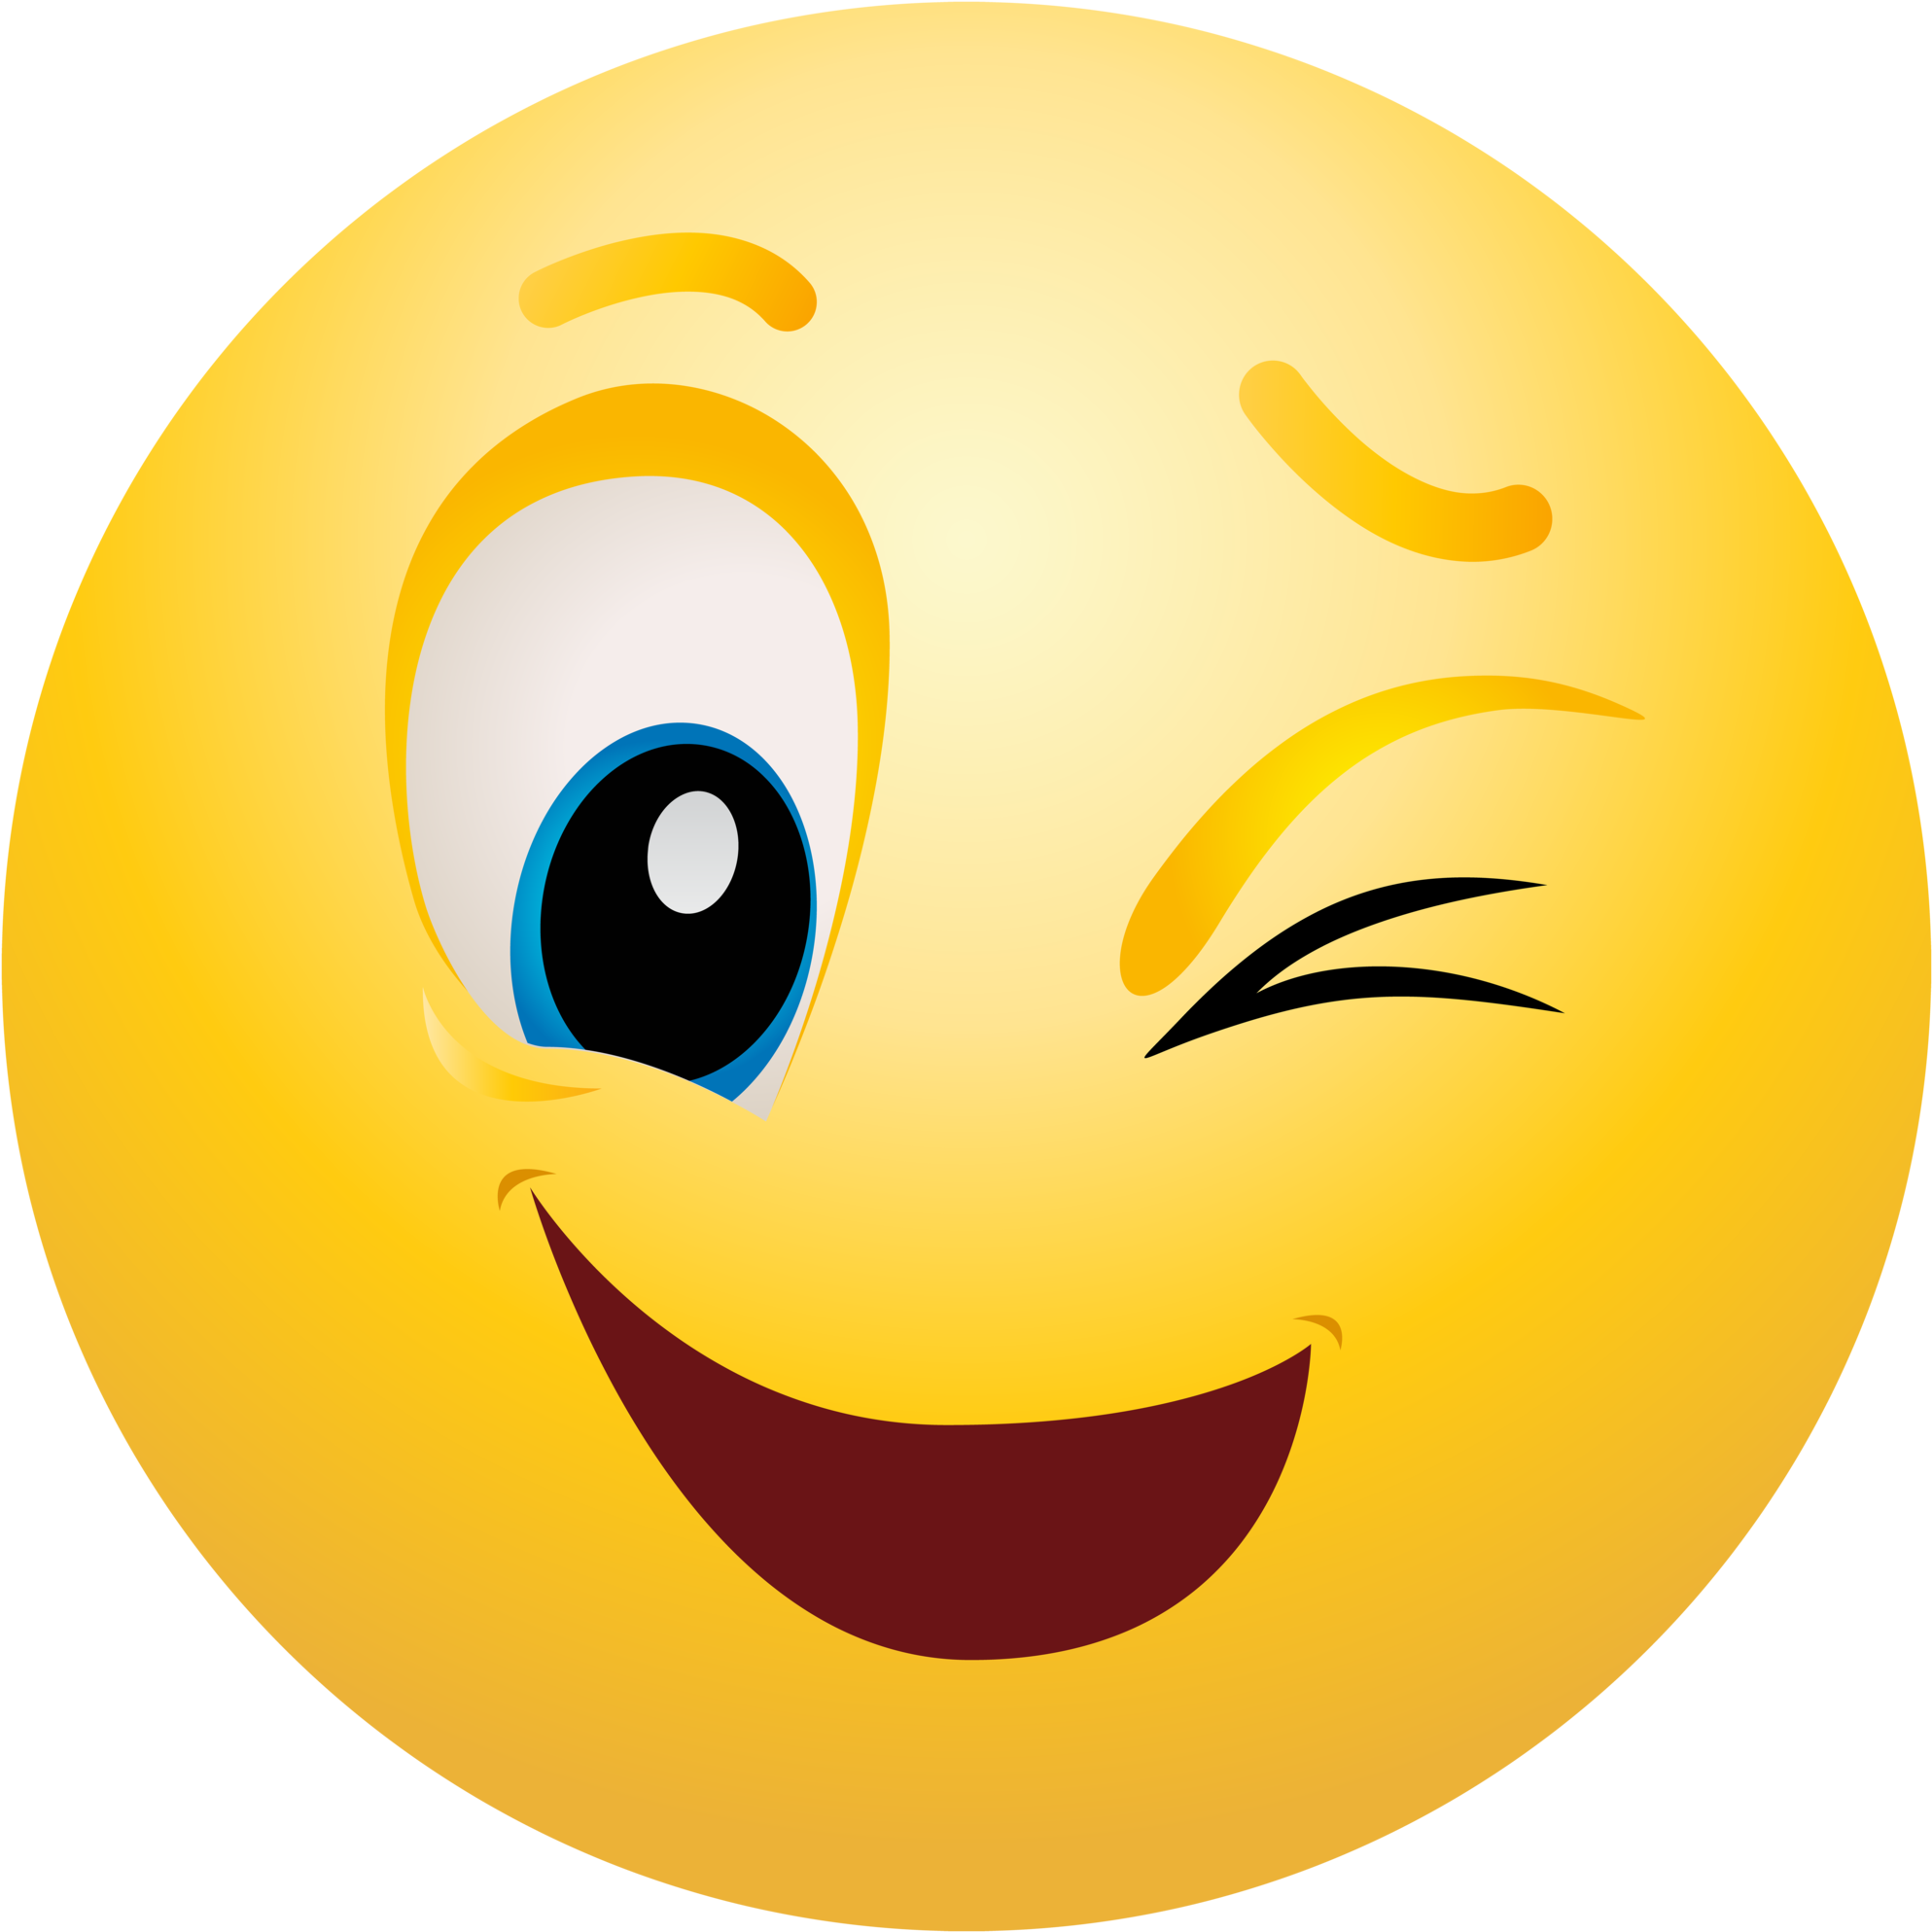 Download Emoticon Emoji Clipart Info Wink Emoji Clipart Png Image With No Background Pngkey Com